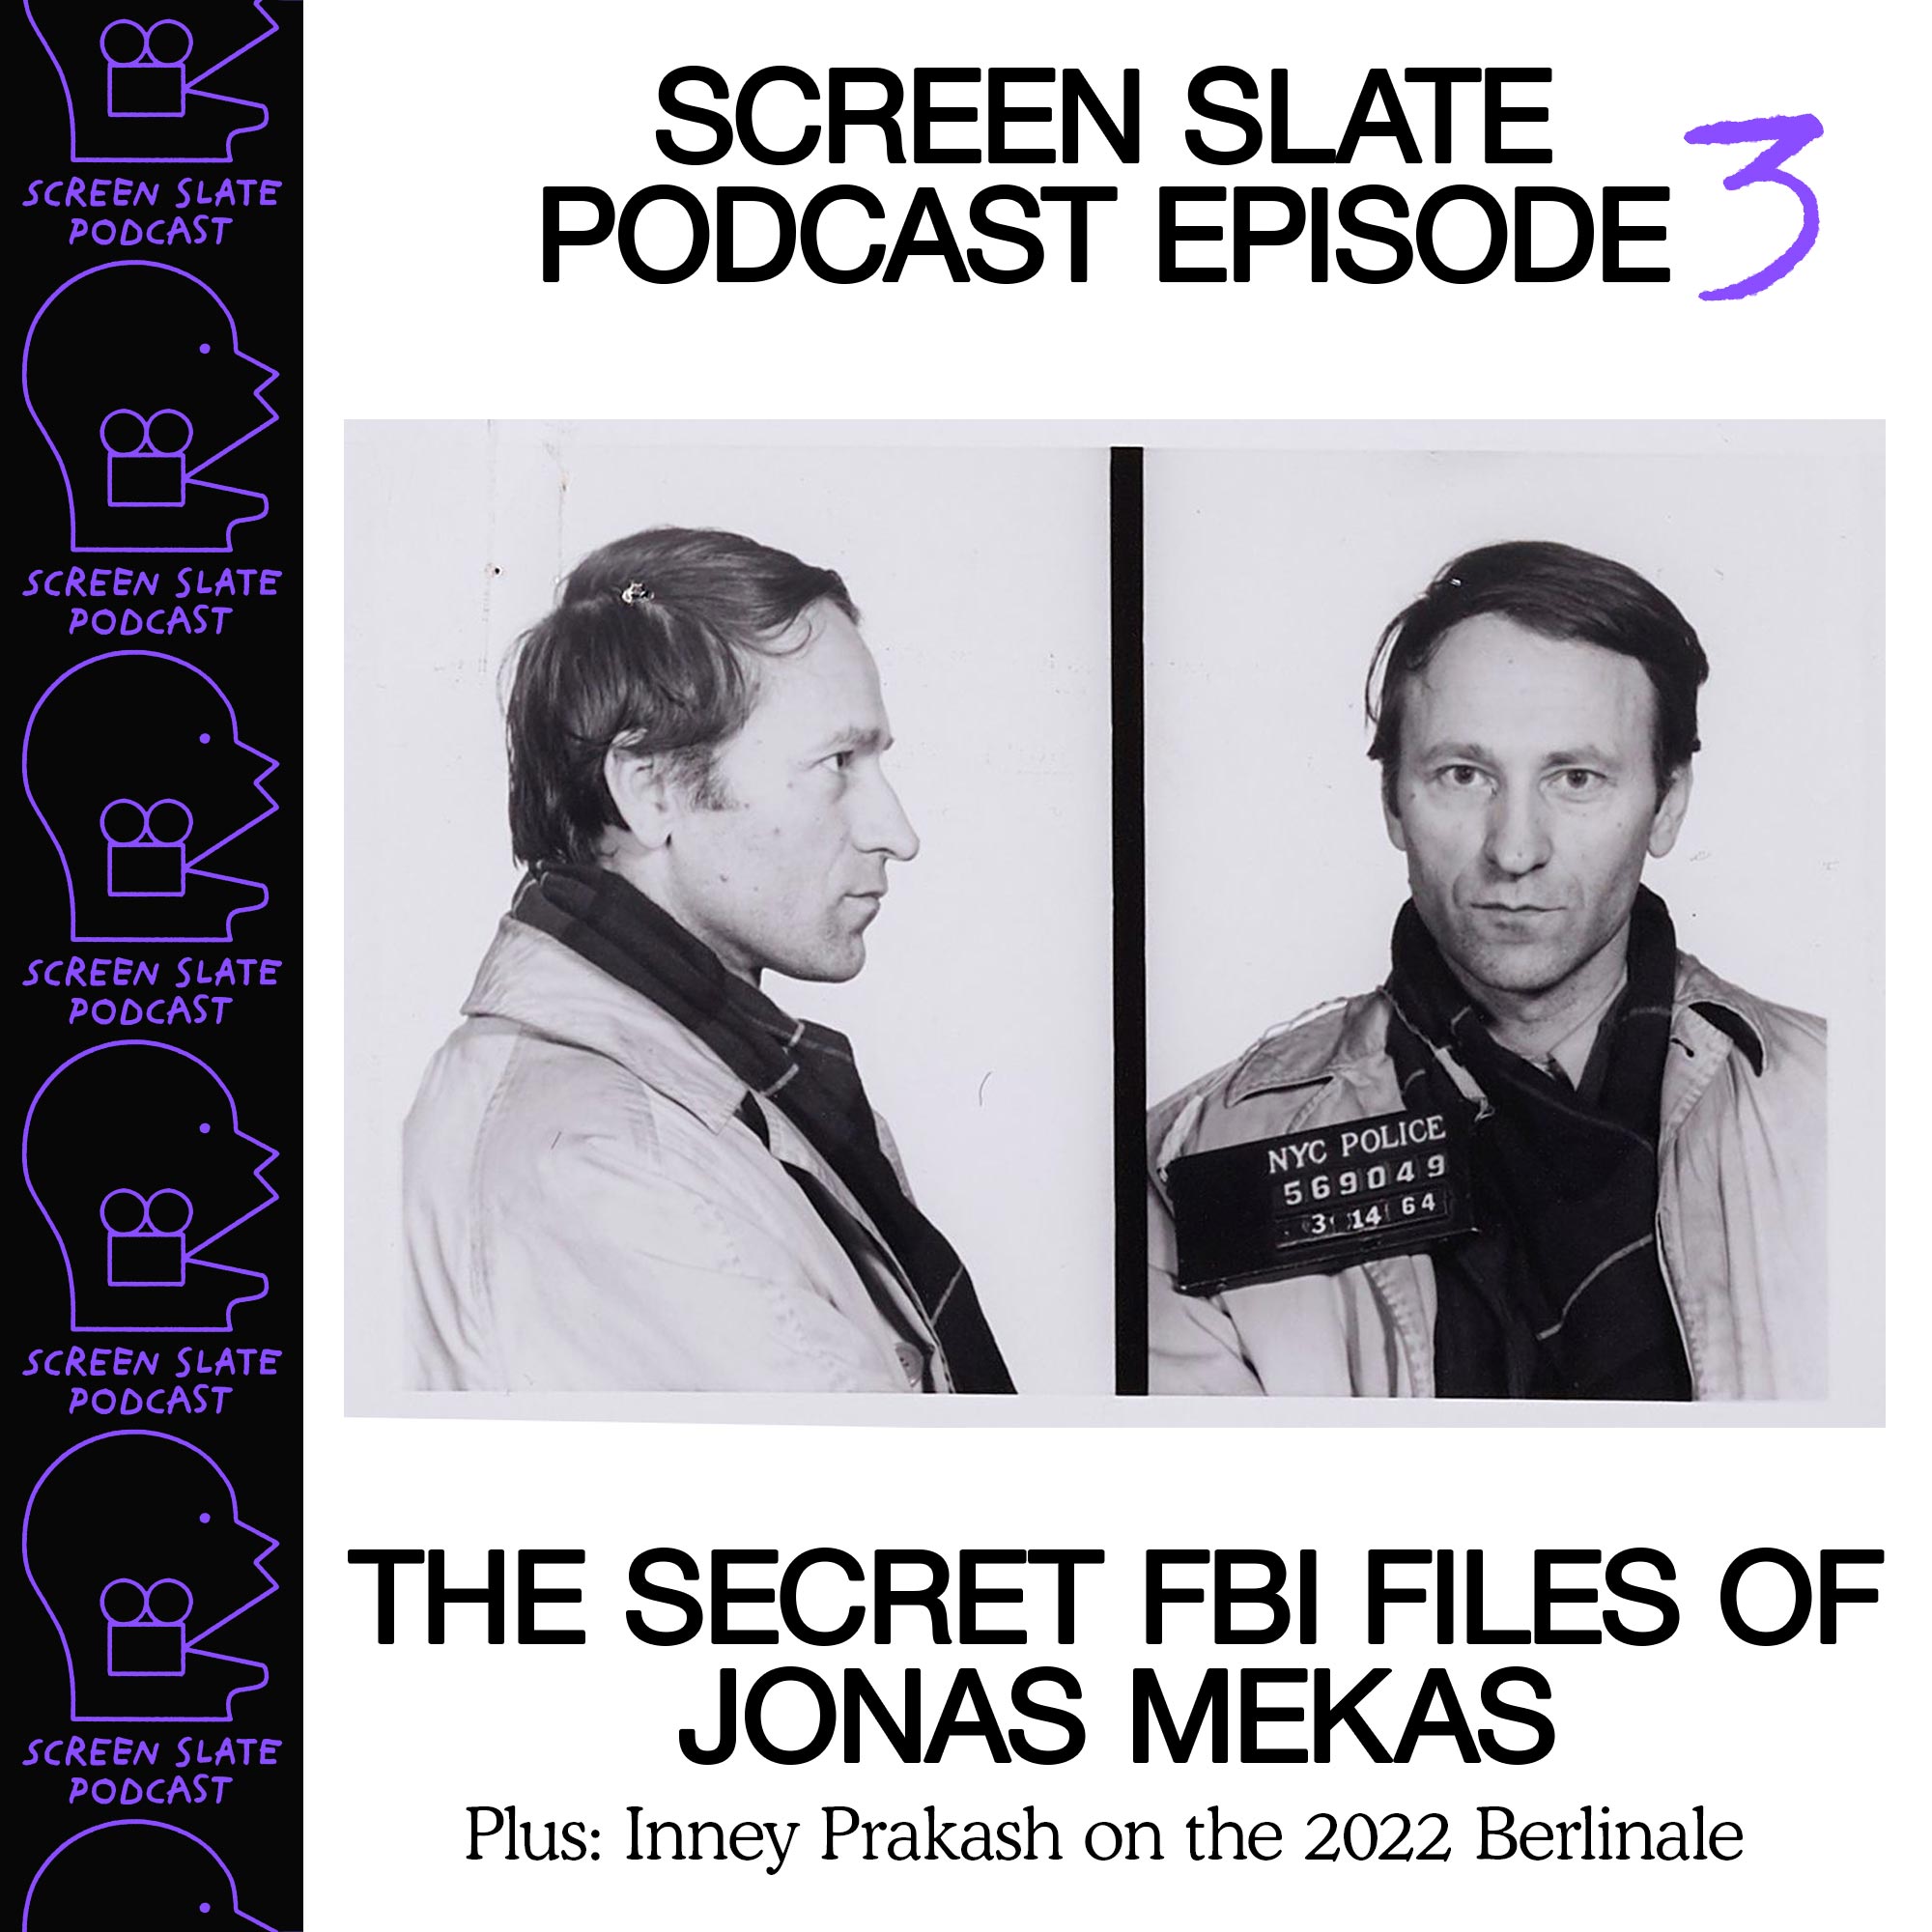 Episode 3 - The Secret FBI Files of Jonas Mekas